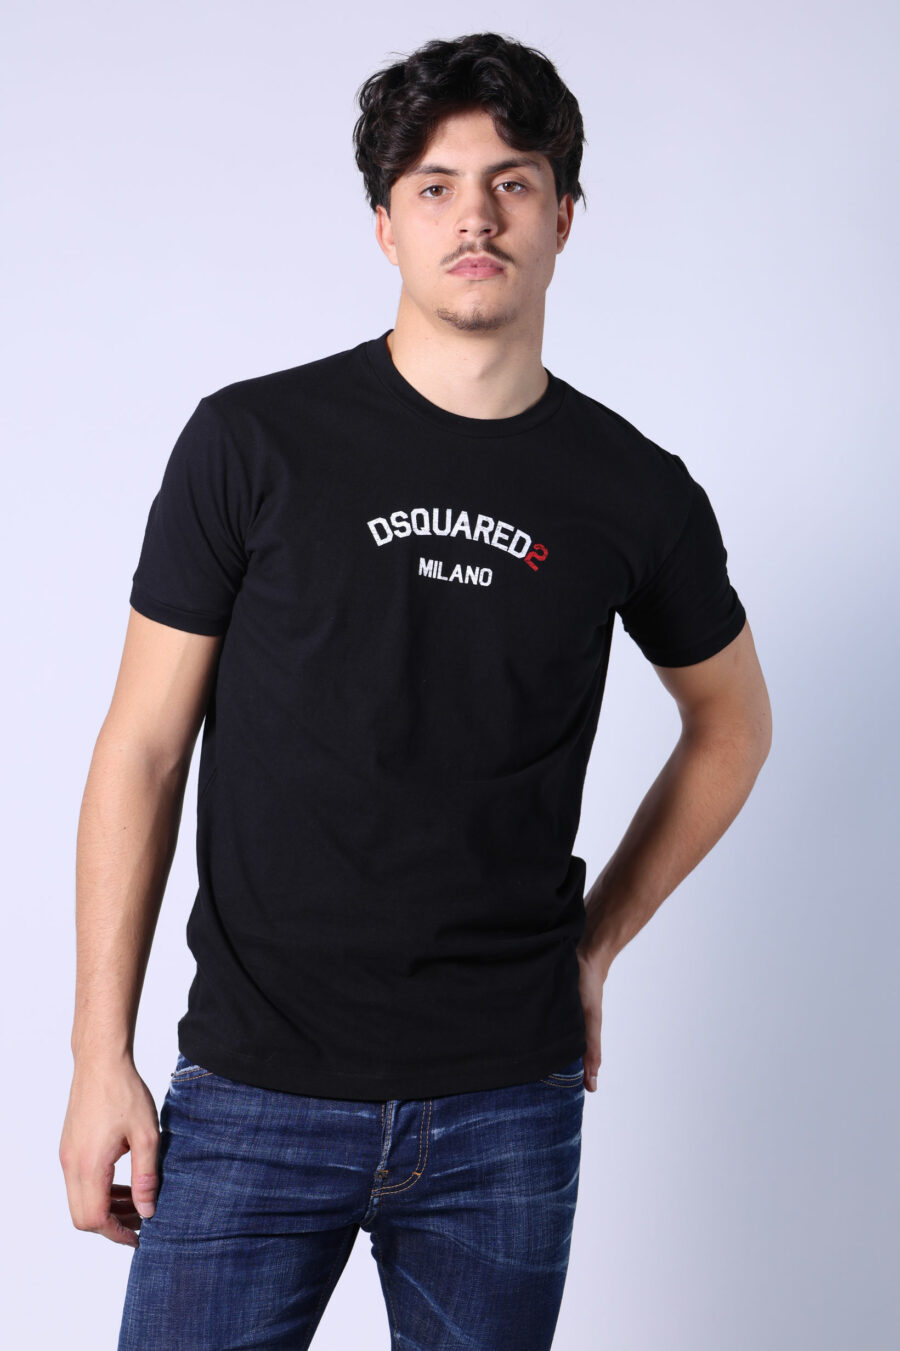 T-shirt preta com minilogo "dsquared2 milano" - Untitled Catalog 05472